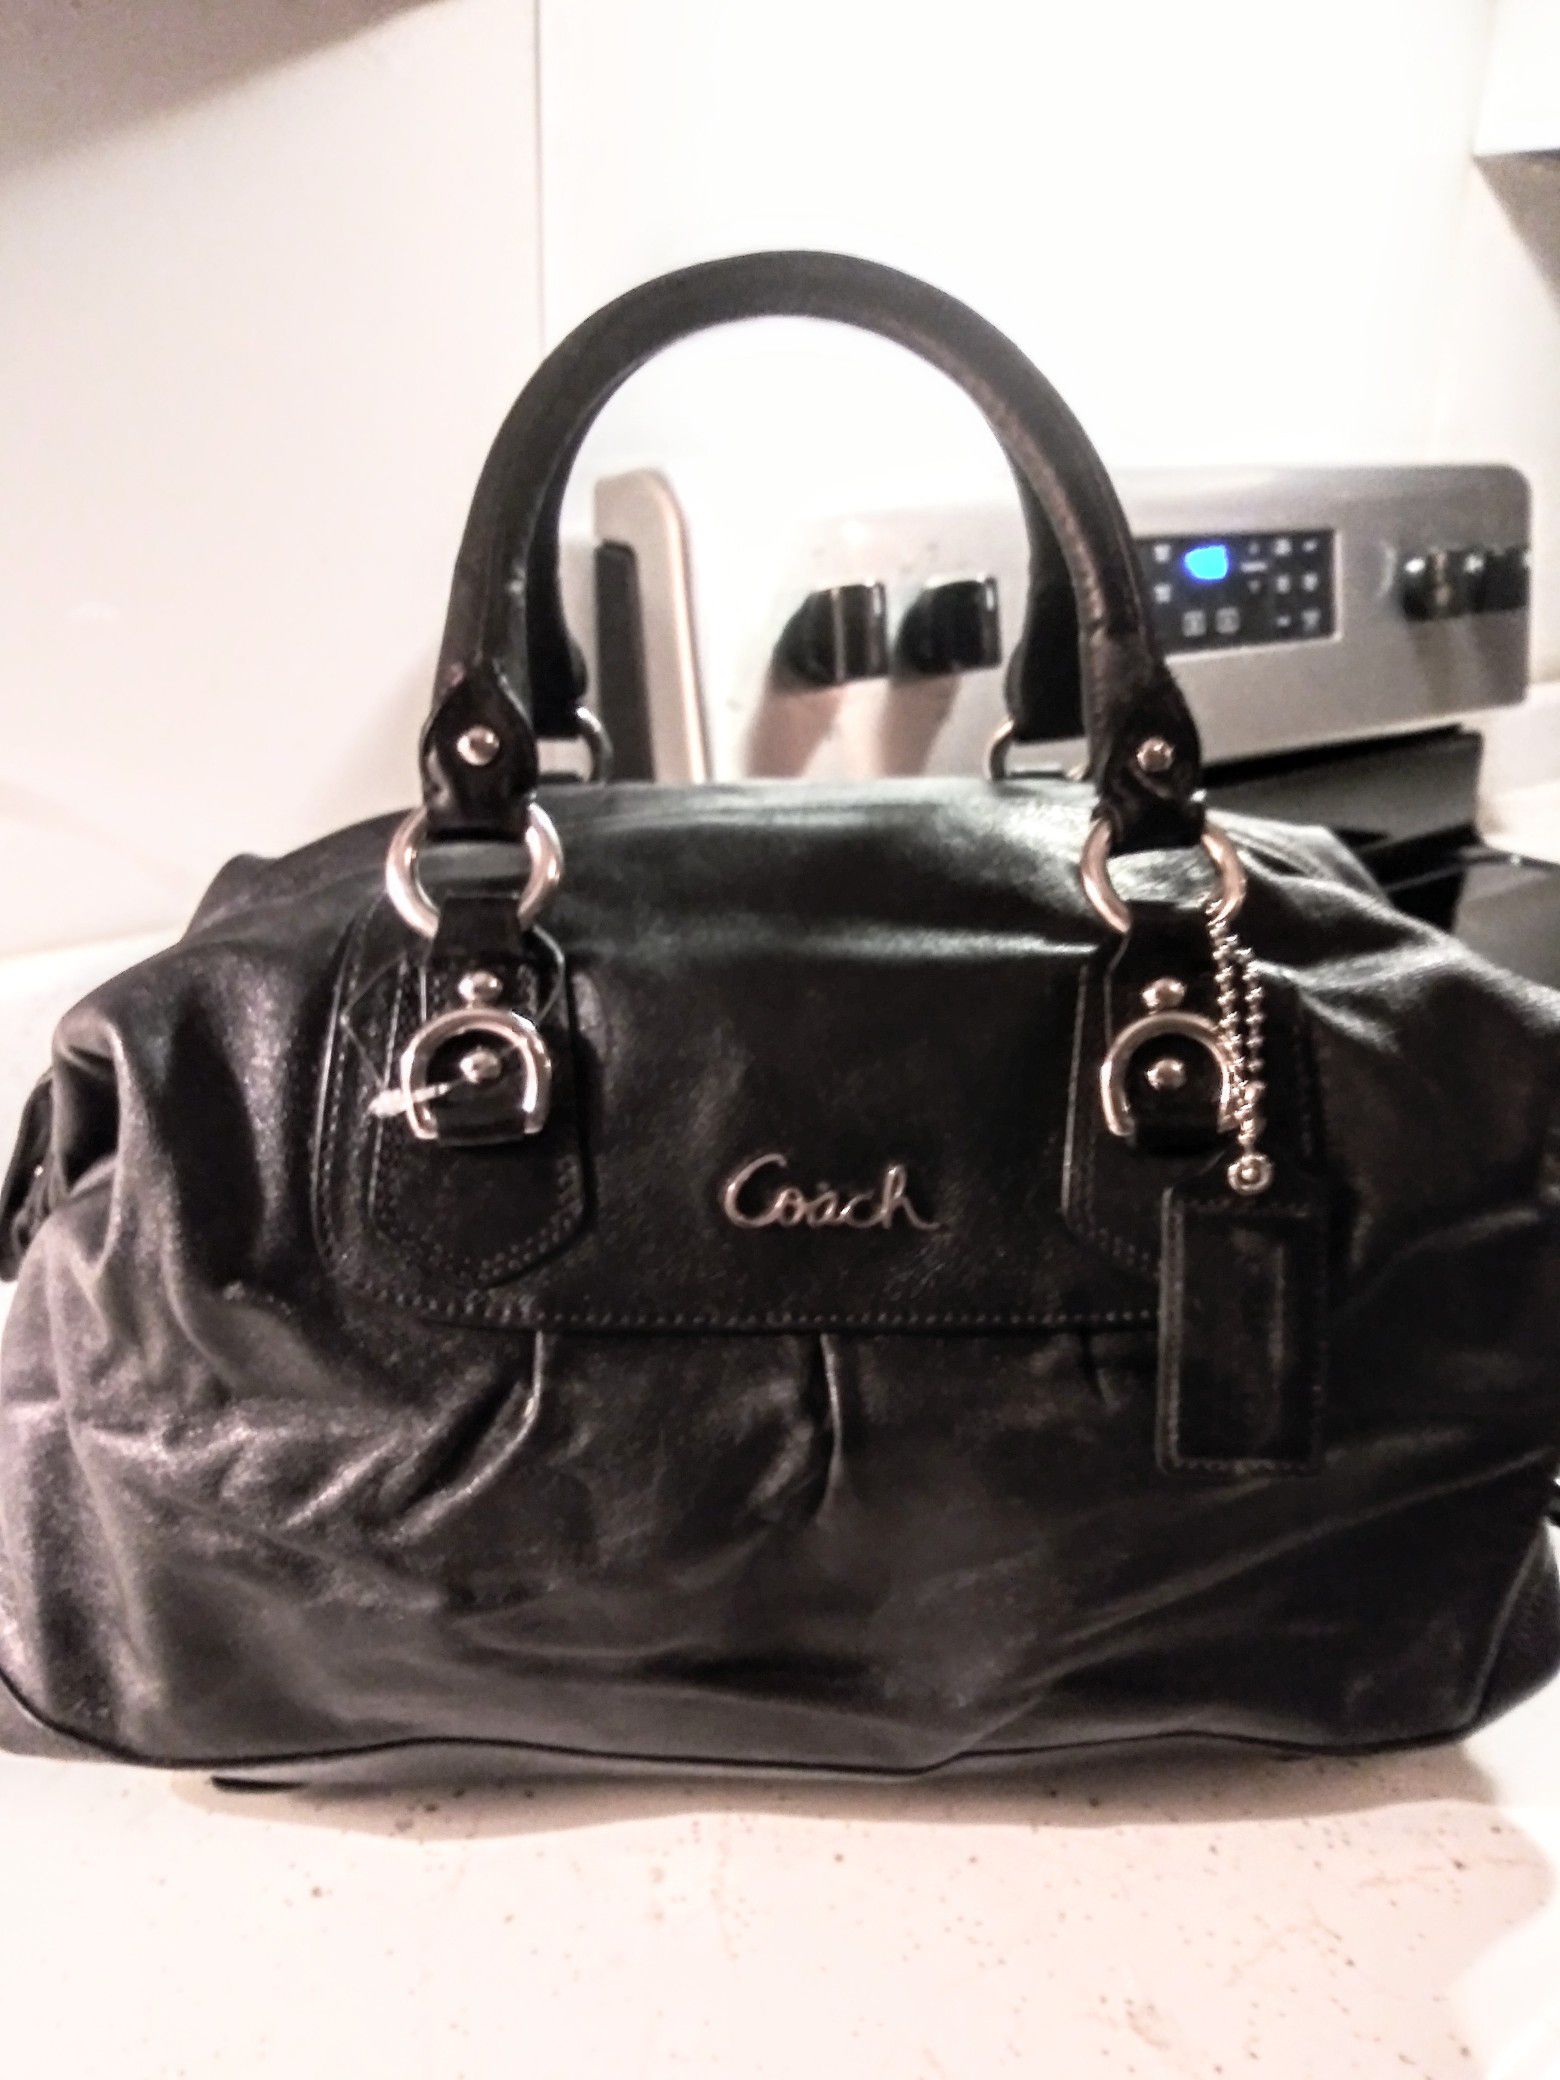 Authentic Leather Coach purse